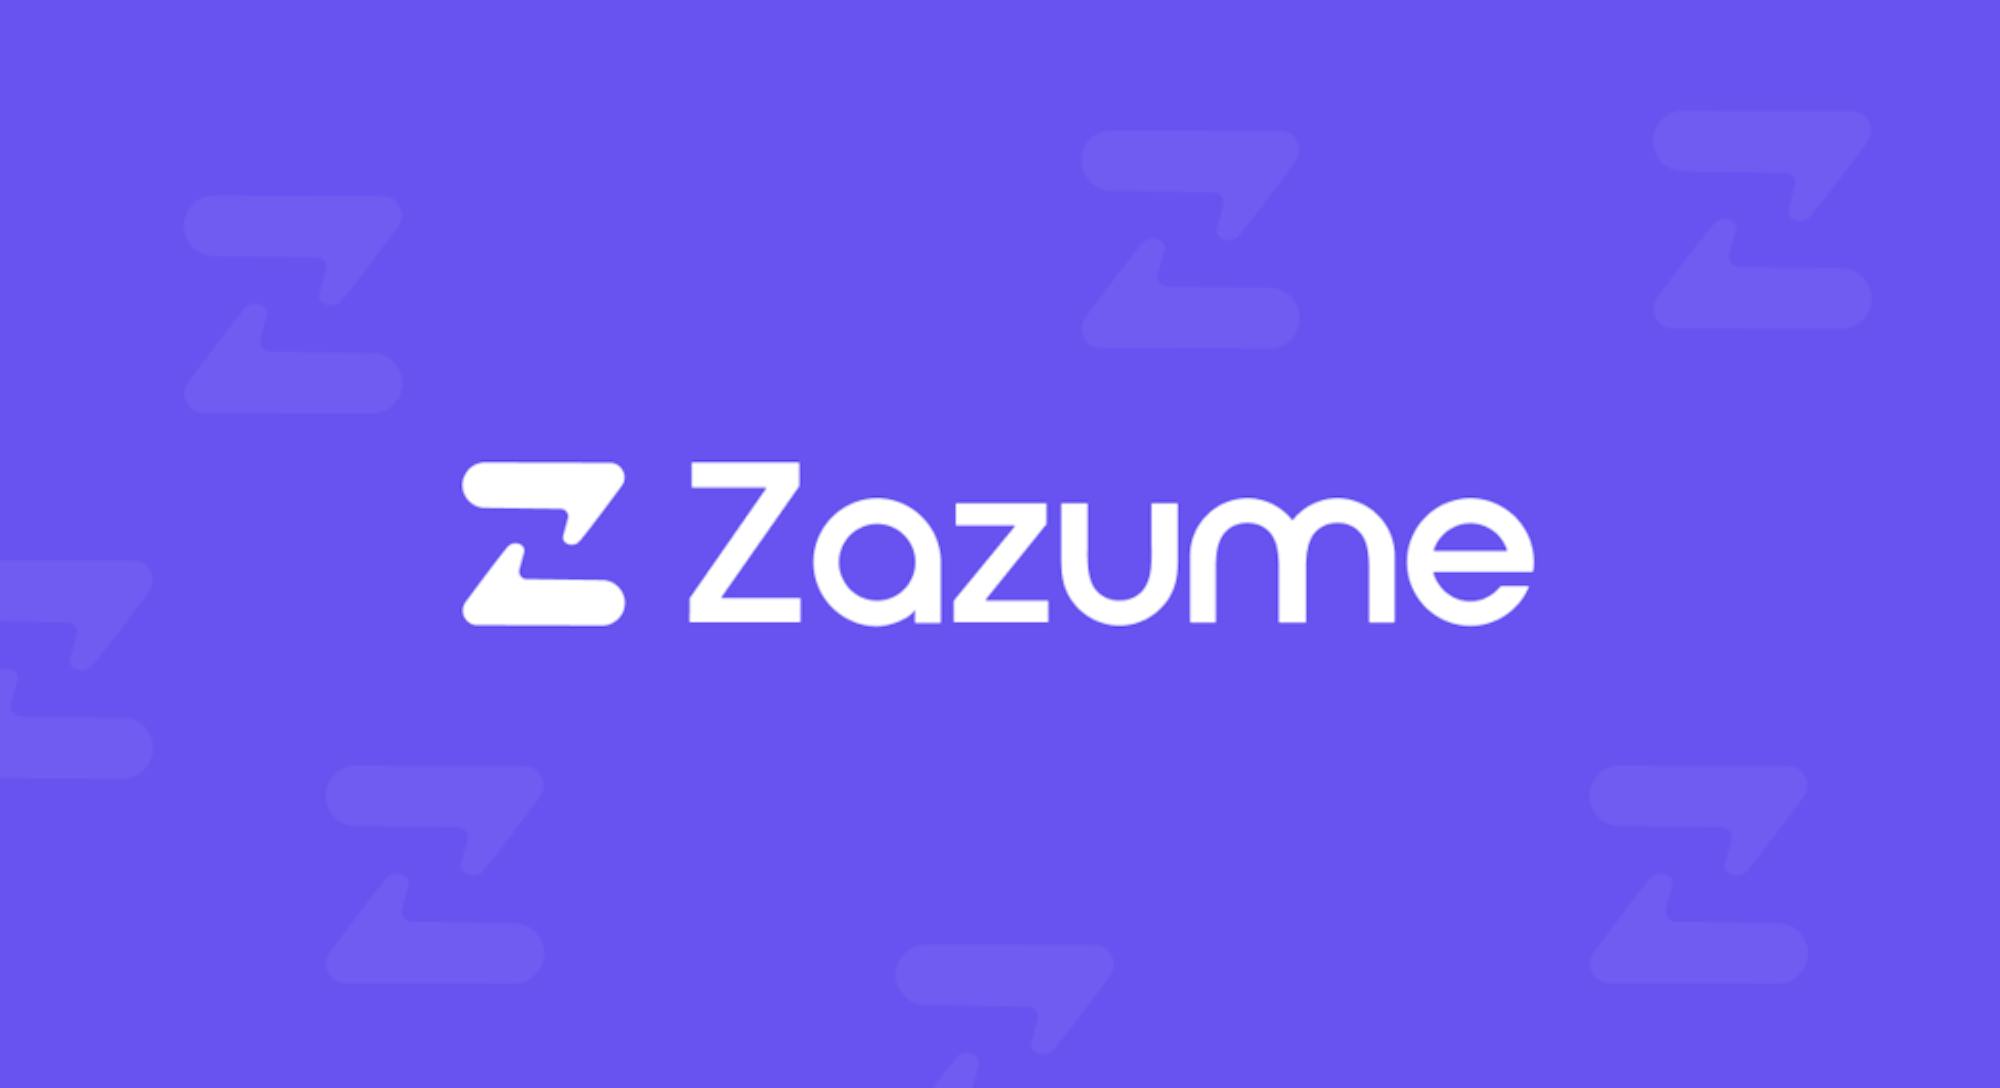 (c) Zazume.com